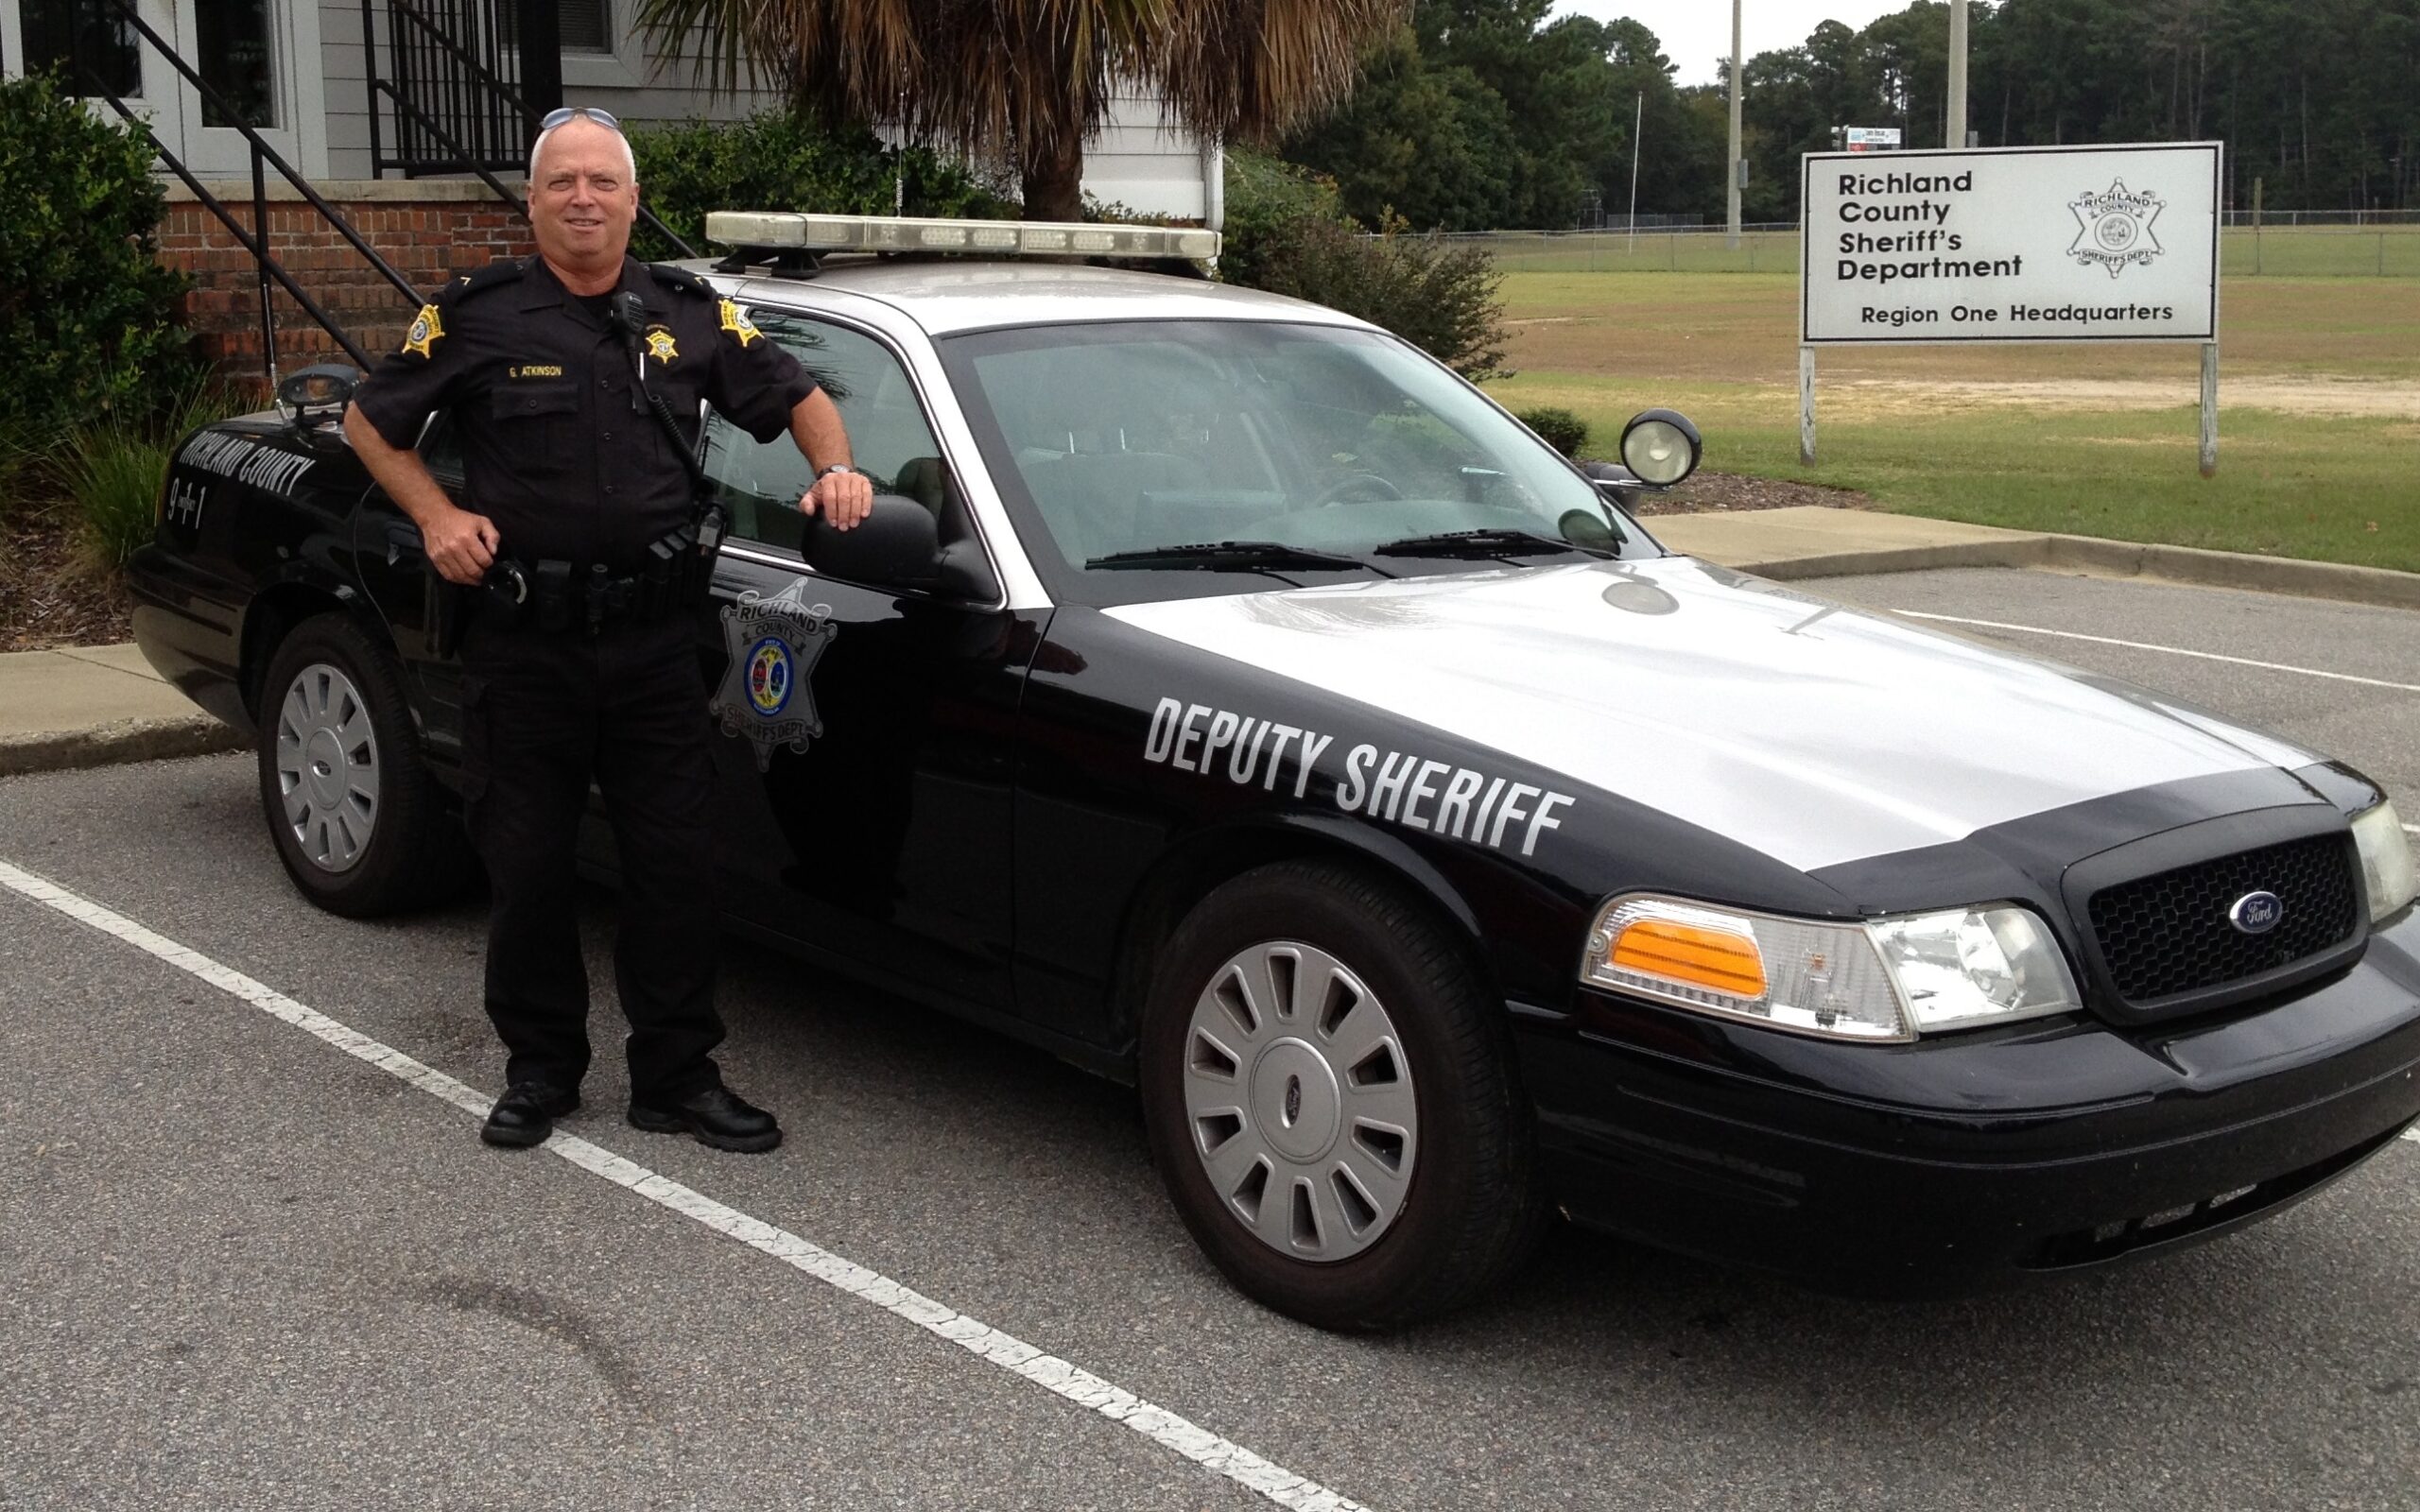 Reserve Deputy standing beside patrol car